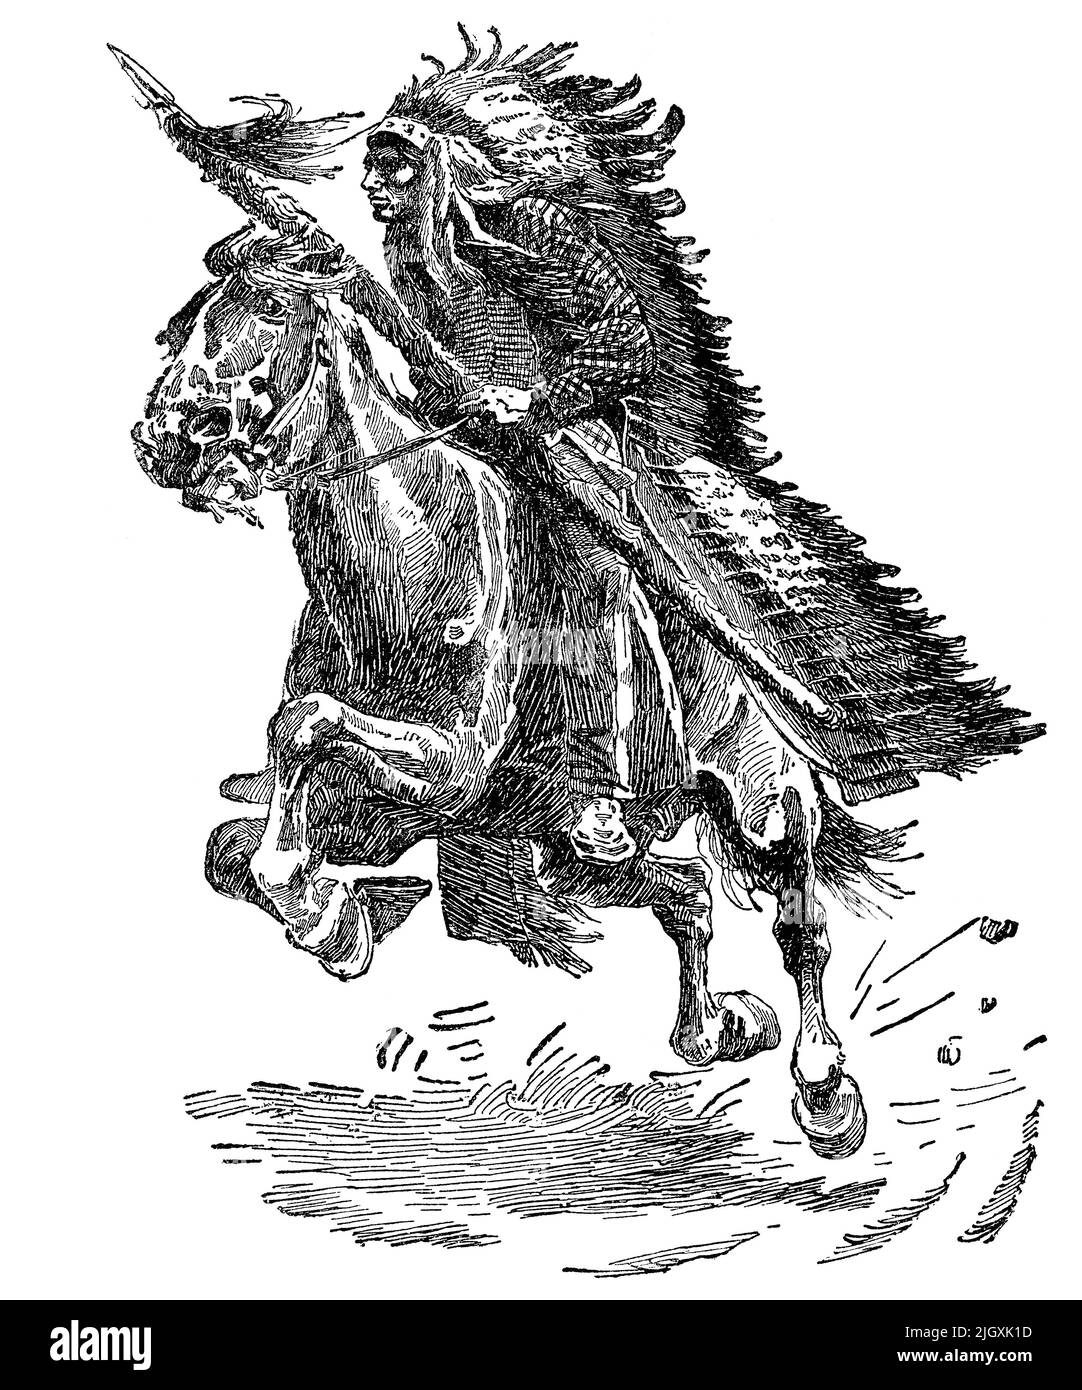 Victorian era engraving of a Native American warrior on horseback. Stock Photo